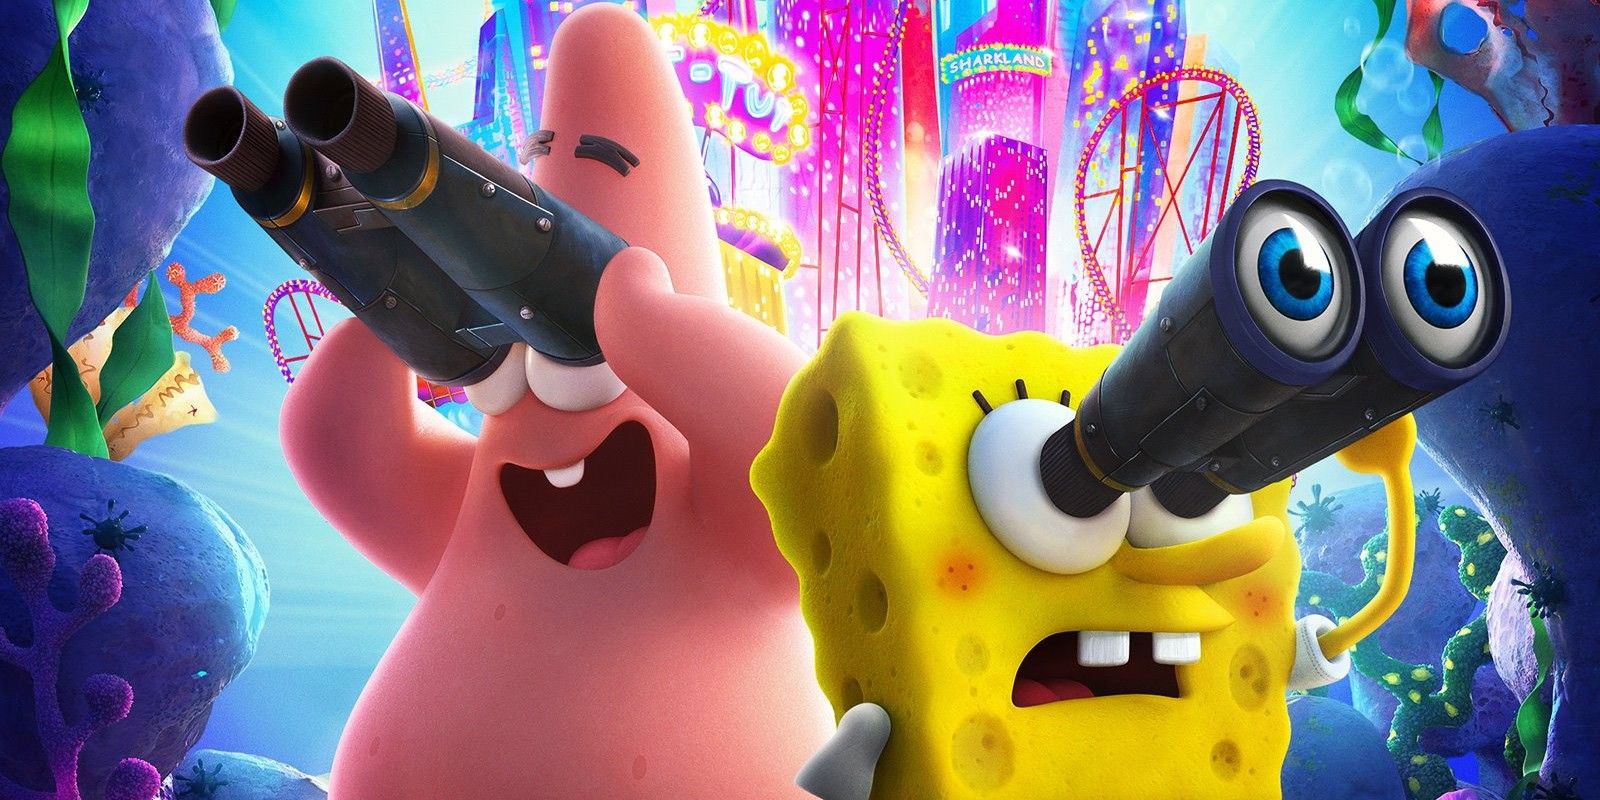 SpongeBob and Patrick looking through binoculars